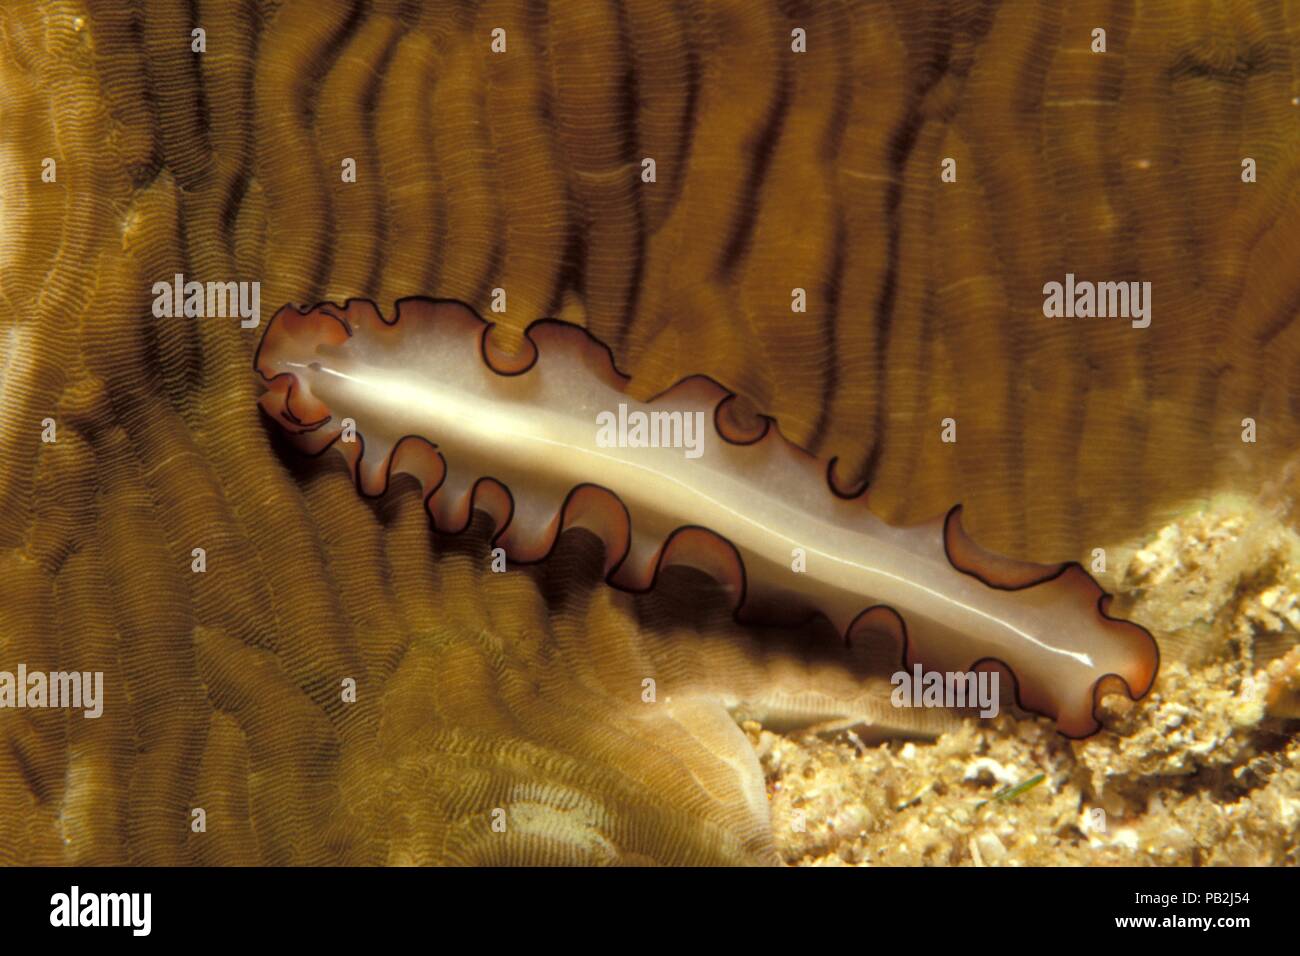 Flatworm marini, Opakweißer Plattwurm, Maiazoon orsaki, Maldive, Malediven Foto Stock